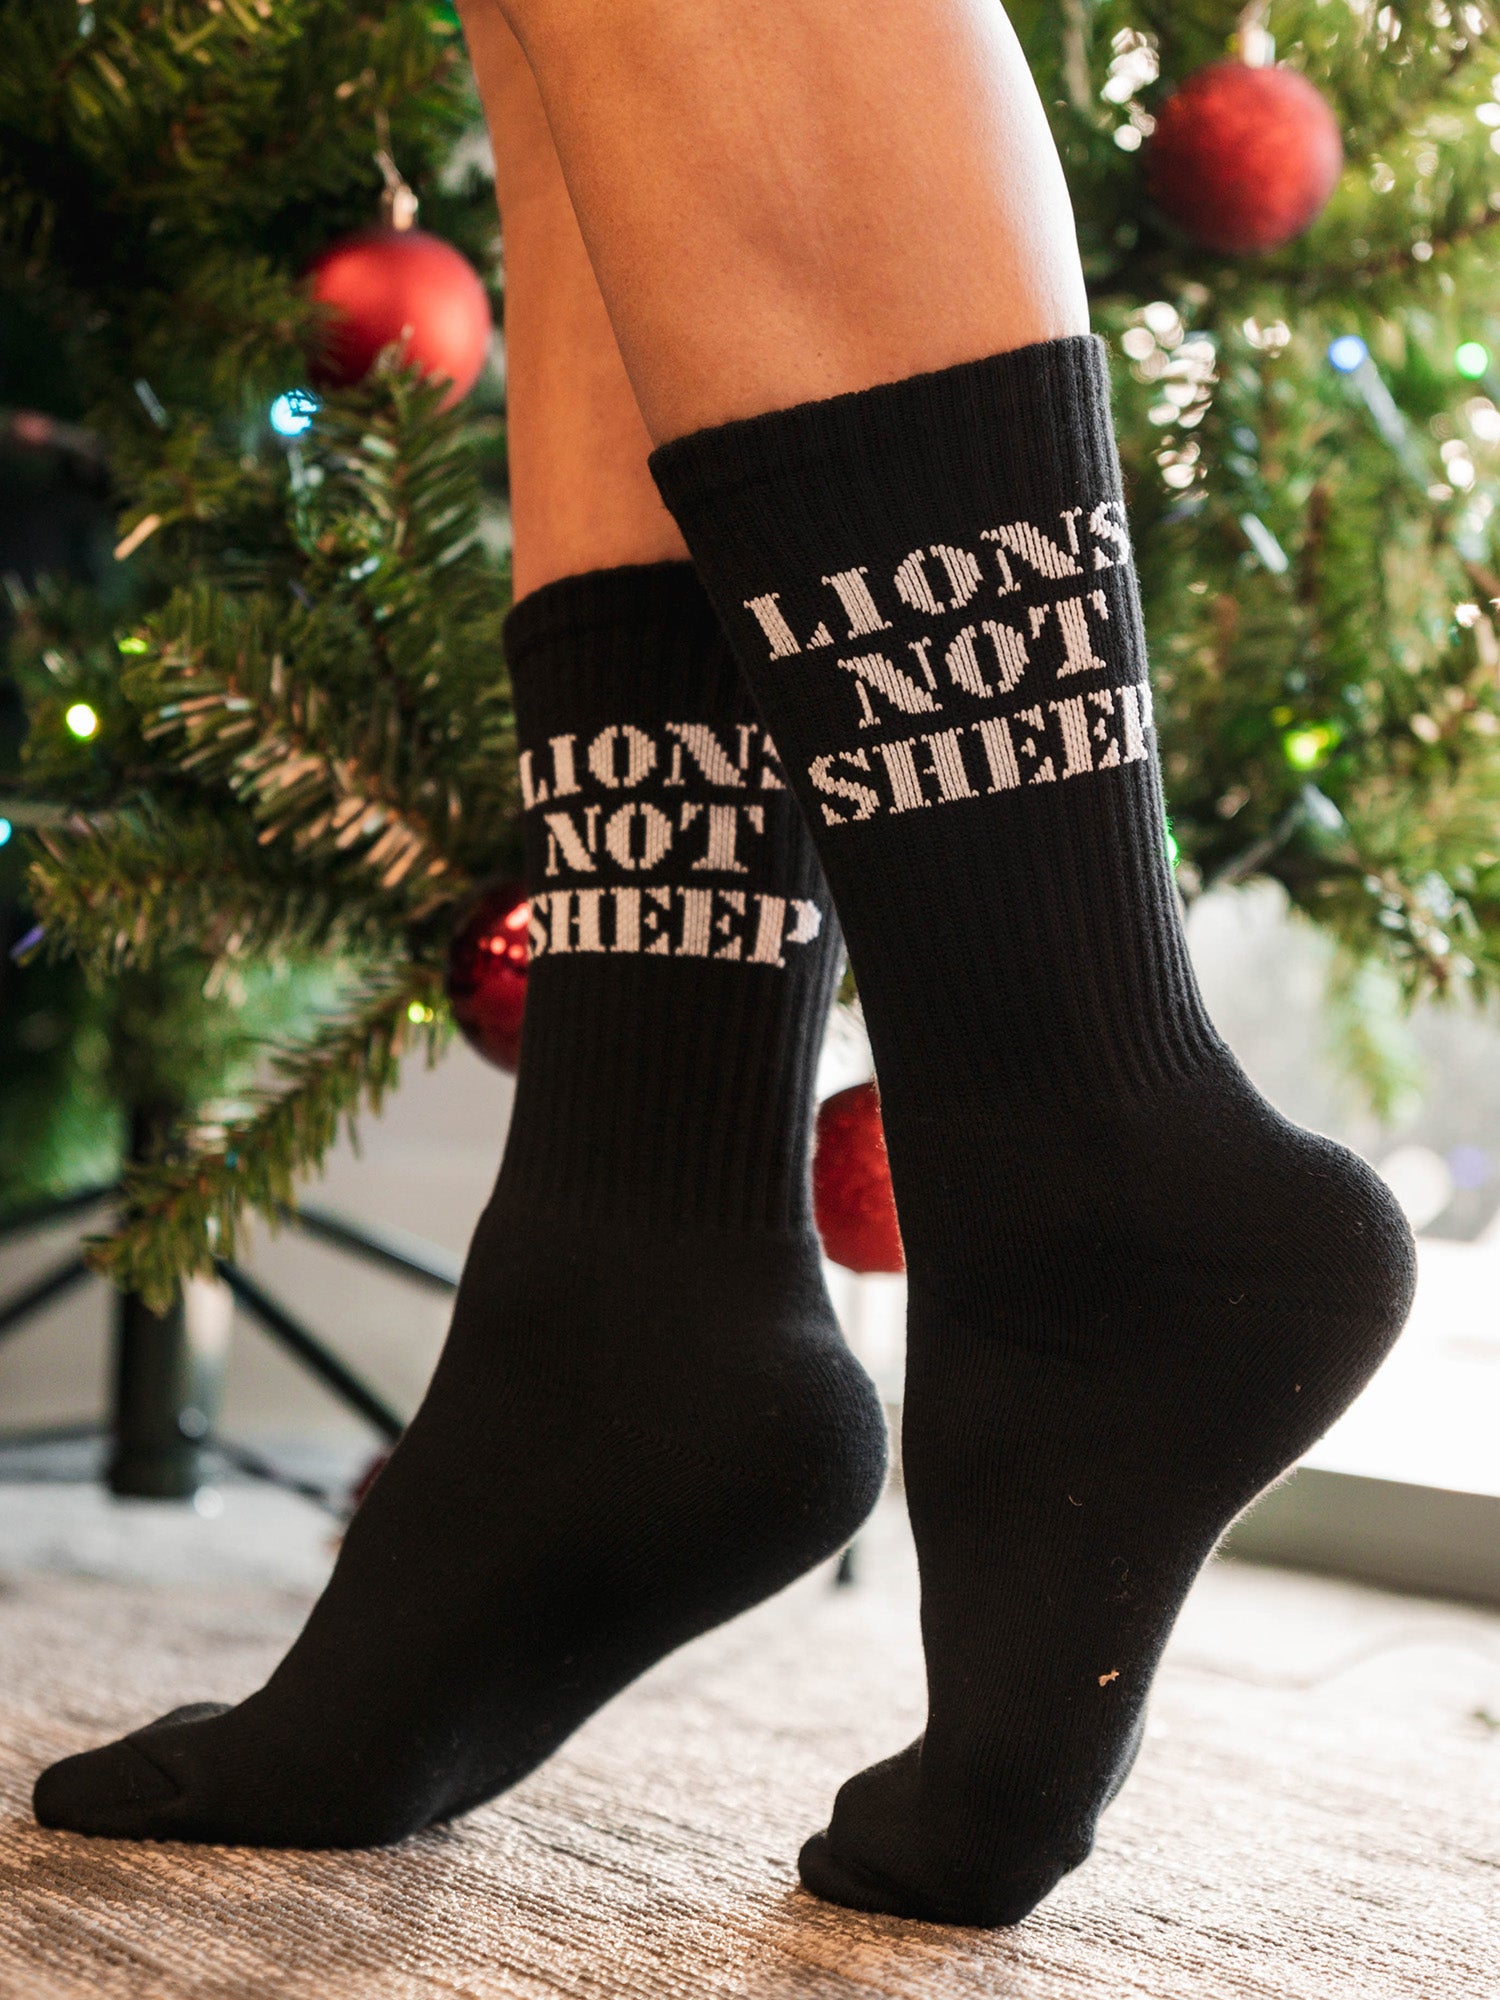 LIONS NOT SHEEP OG Socks - Lions Not Sheep ®